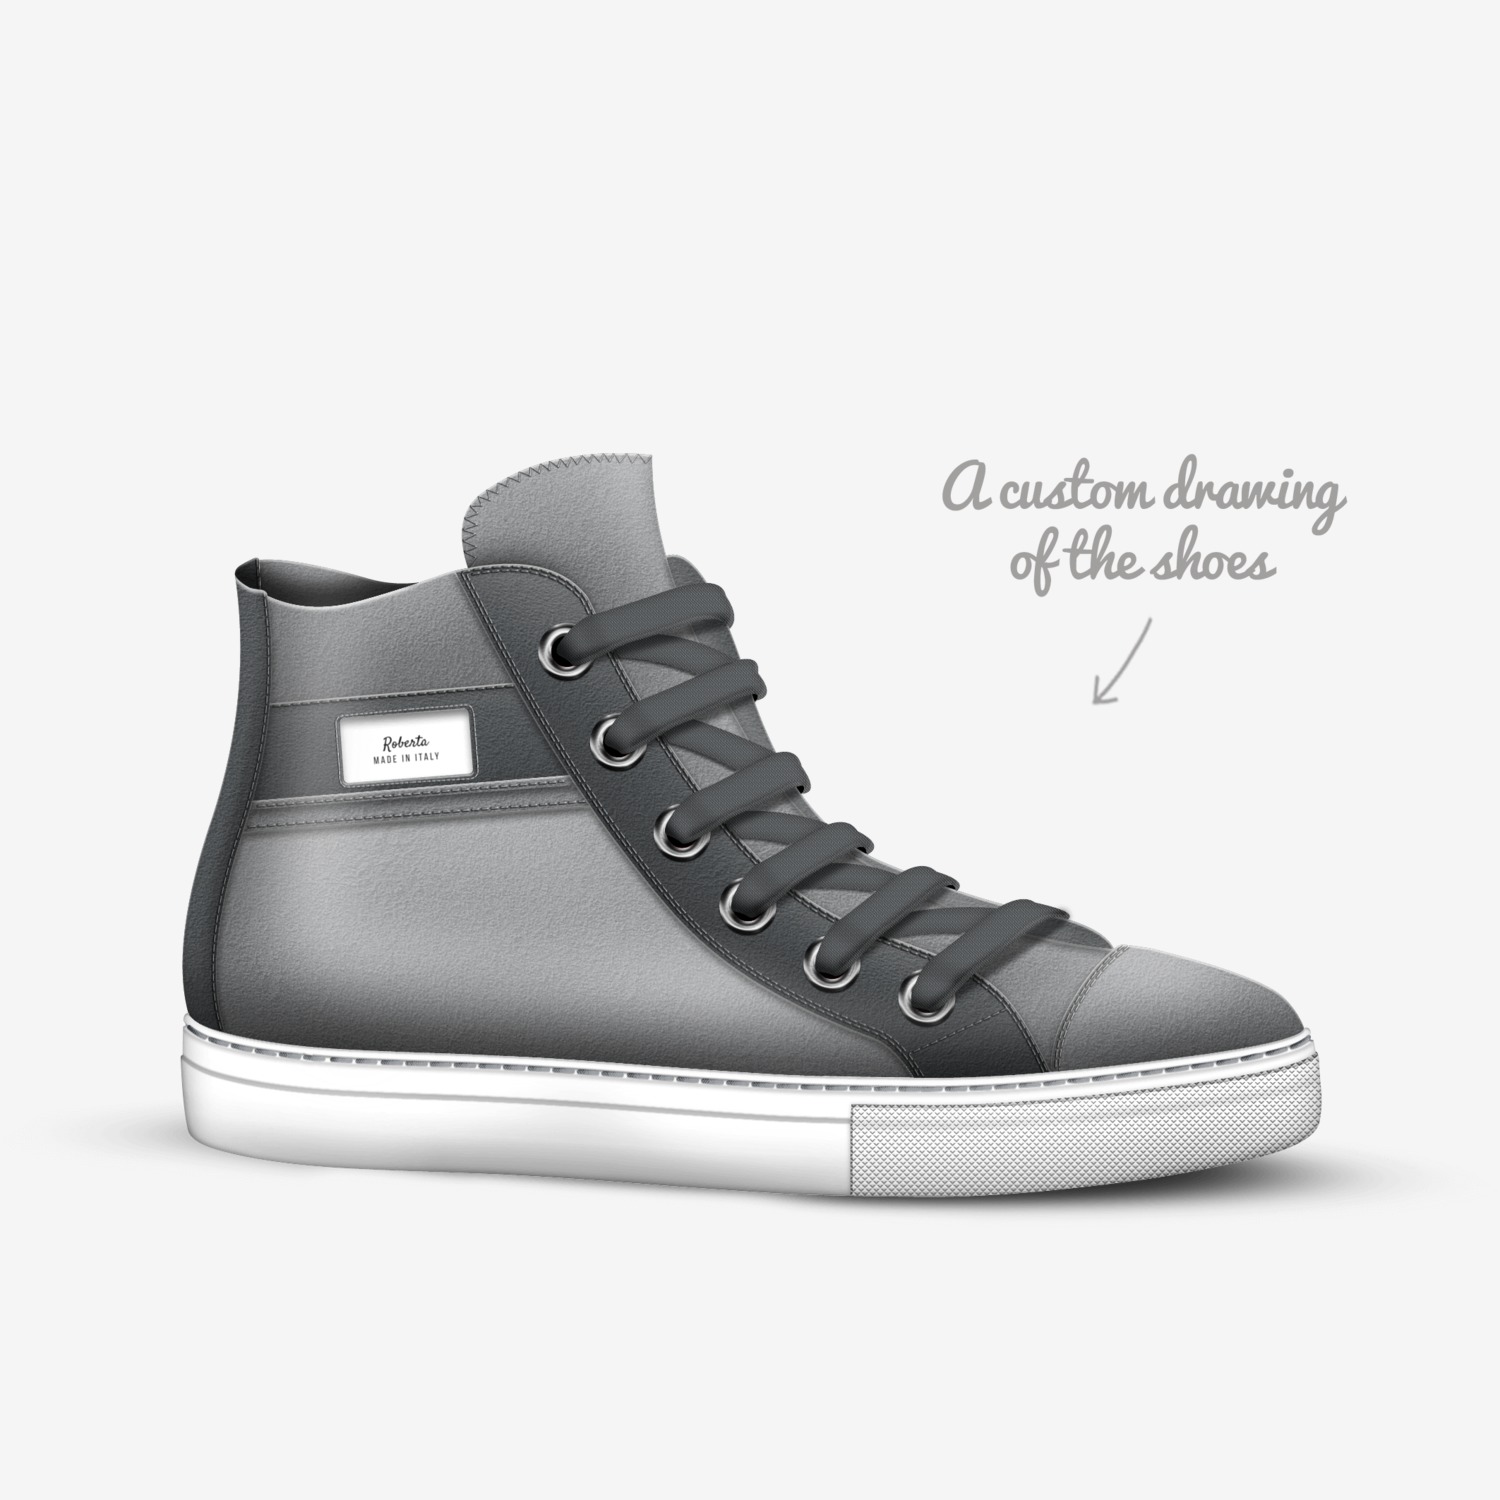 Roberta | A Custom Shoe concept by Bertah